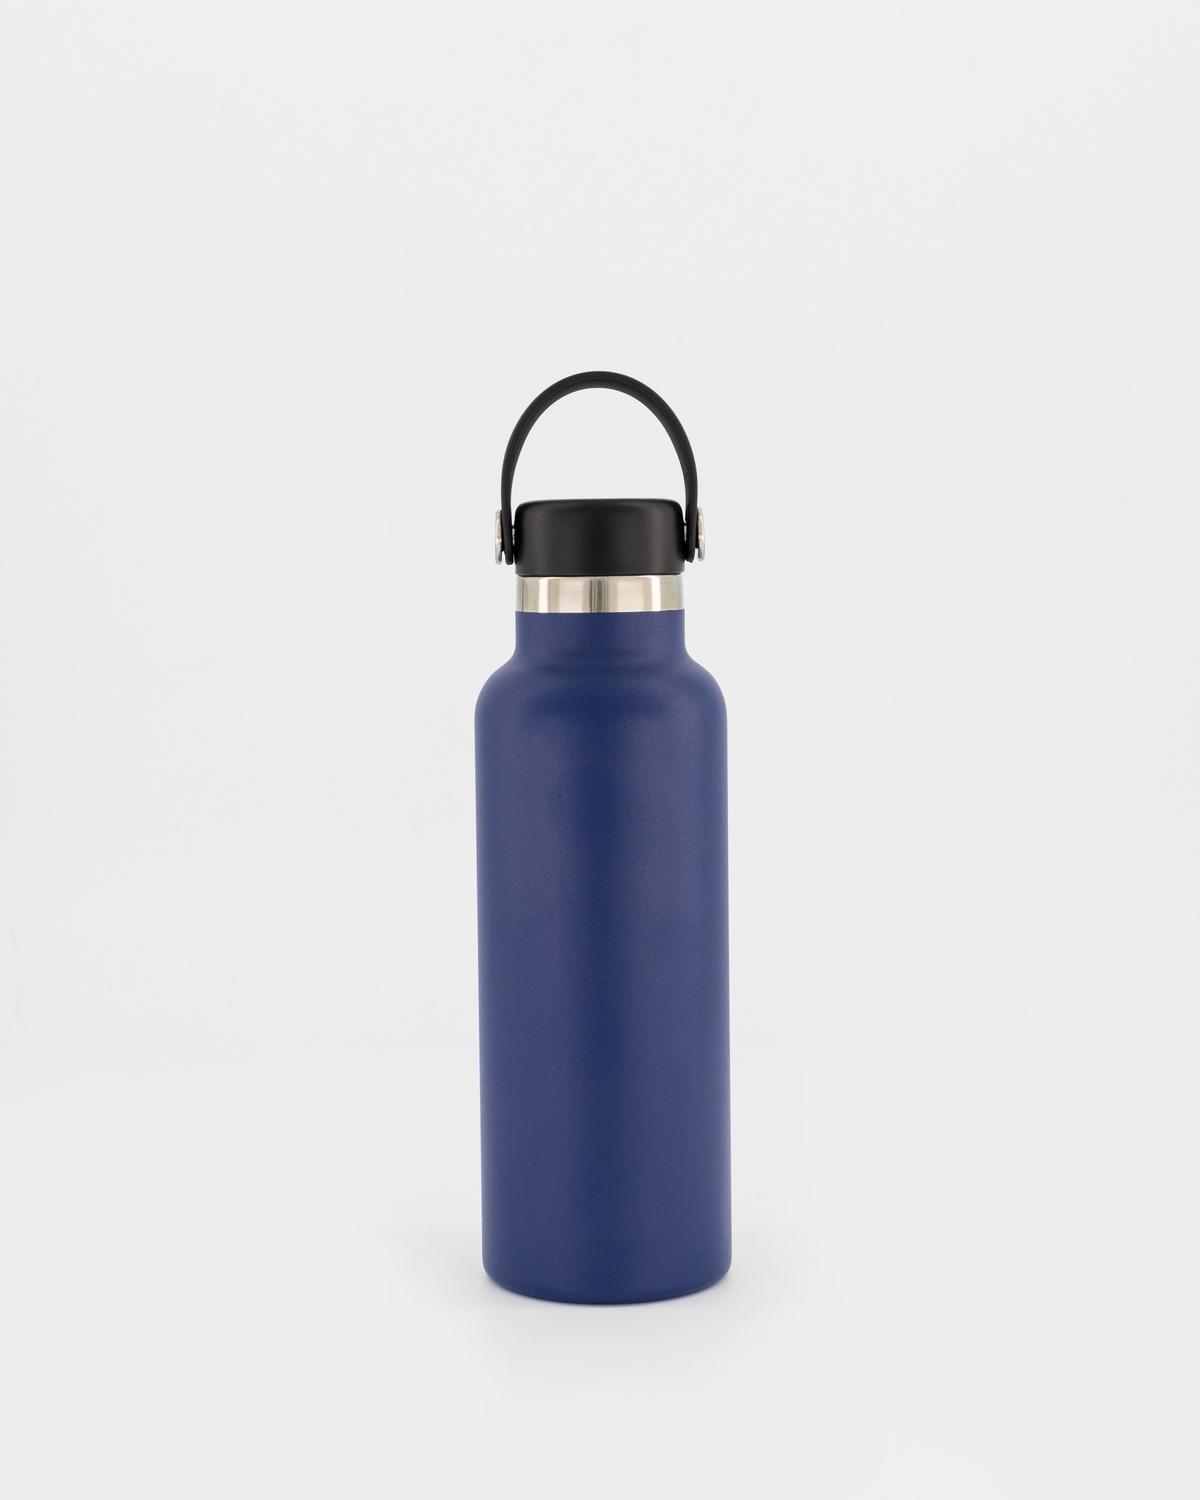 Hydro Flask 532ml Standard Mouth Bottle -  Navy